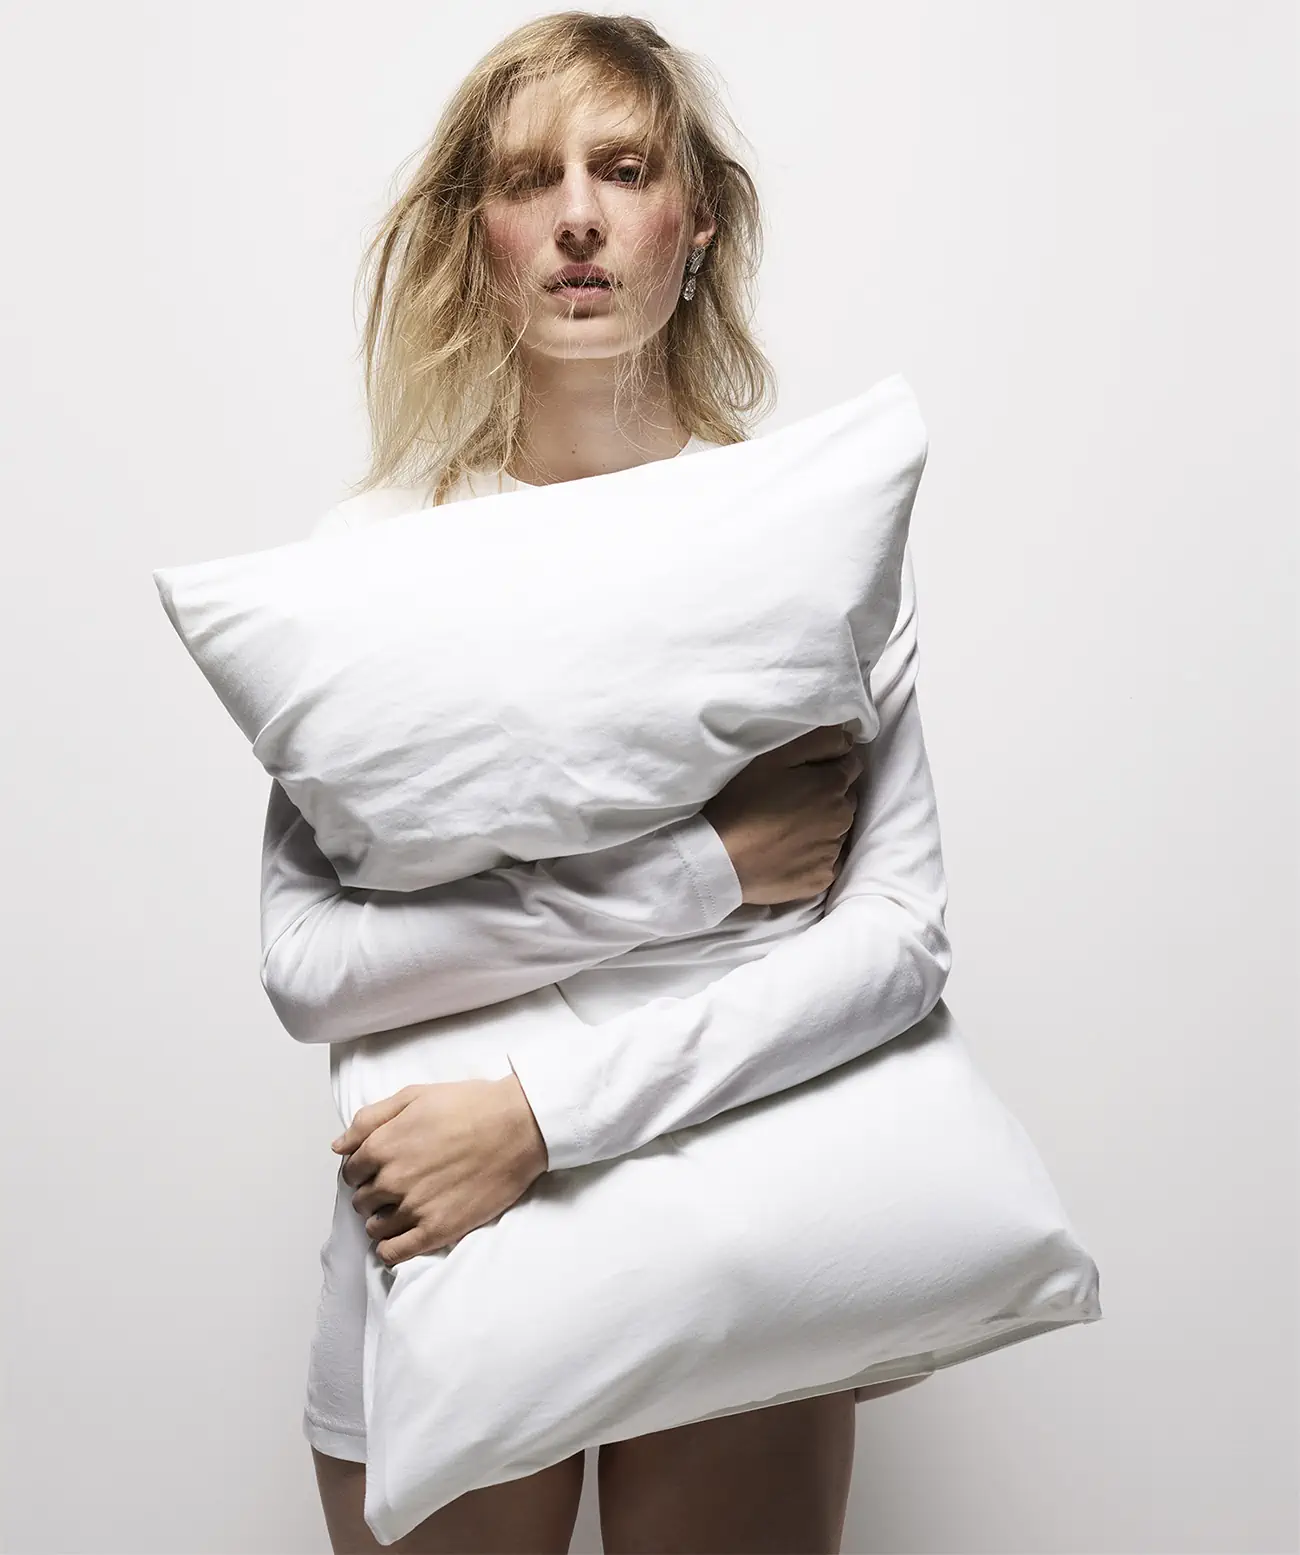 Julia Nobis covers Harper’s Bazaar US May 2023 by Amy Troost